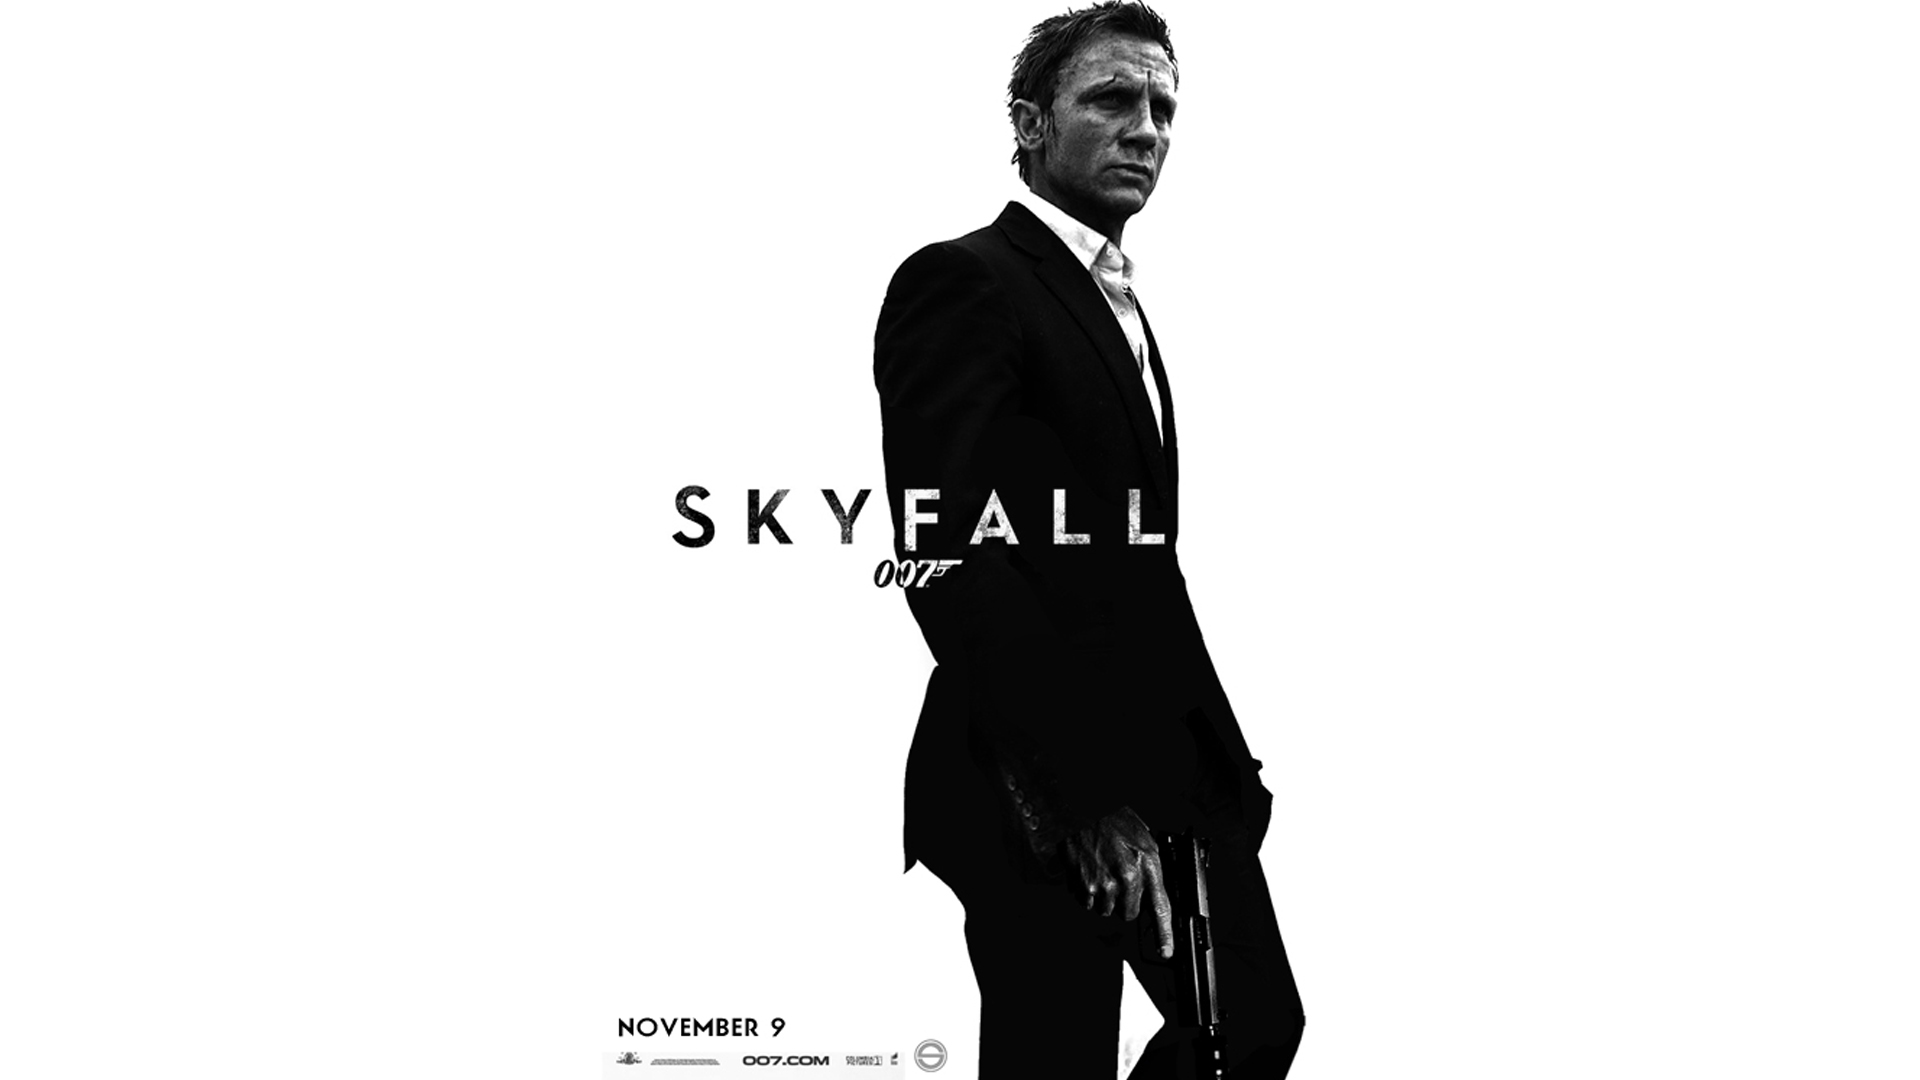 Skyfall-James-Bond-wallpaper-daniel-craig-32623669-1920-1080.jpg